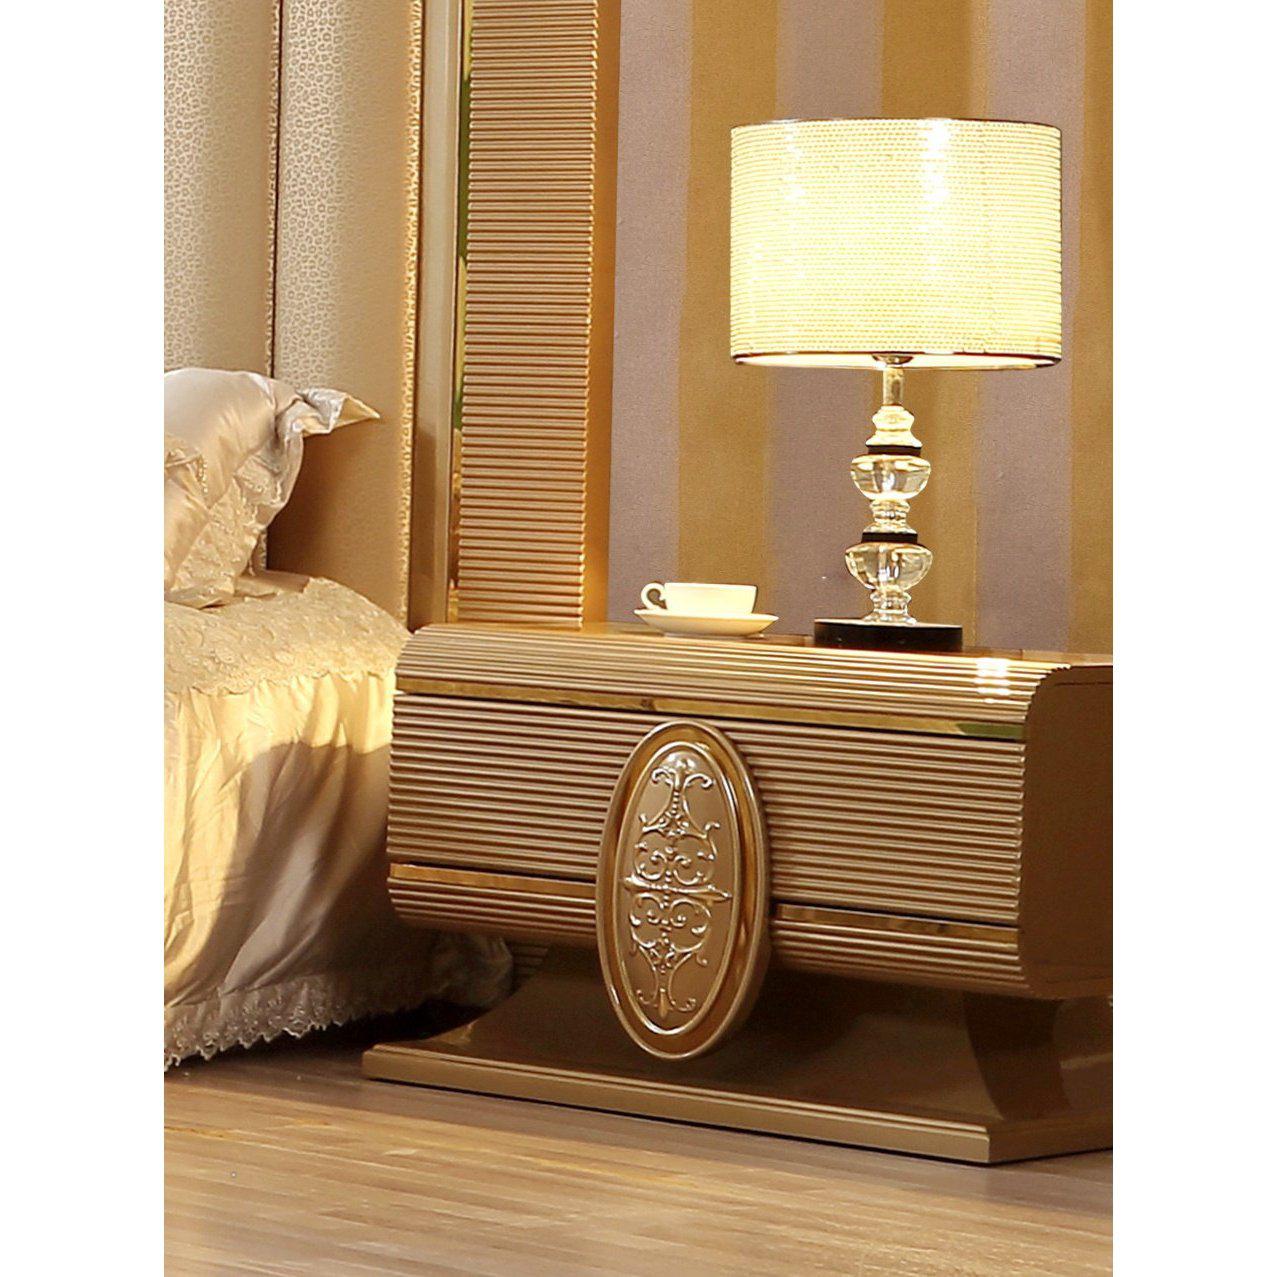 Homey Design Luxury Hd-922 - Ek 4Pc Bedroom Set-Iron Home Concepts